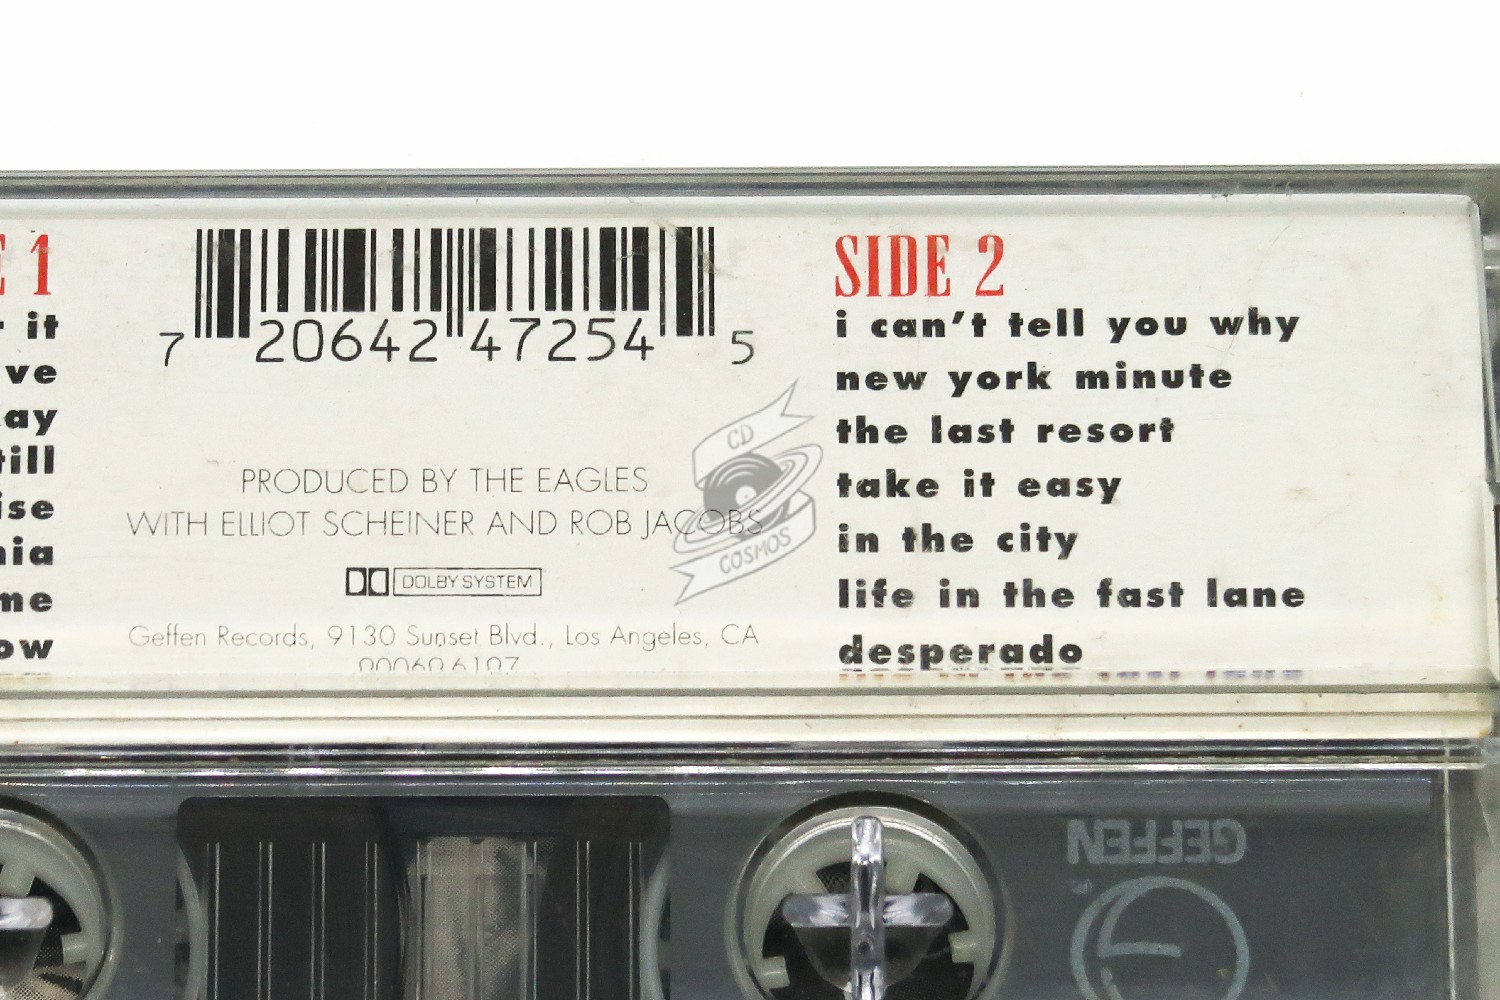 EAGLES - Get Over It / Get Over It (Live)- Cassette Tape Single (1